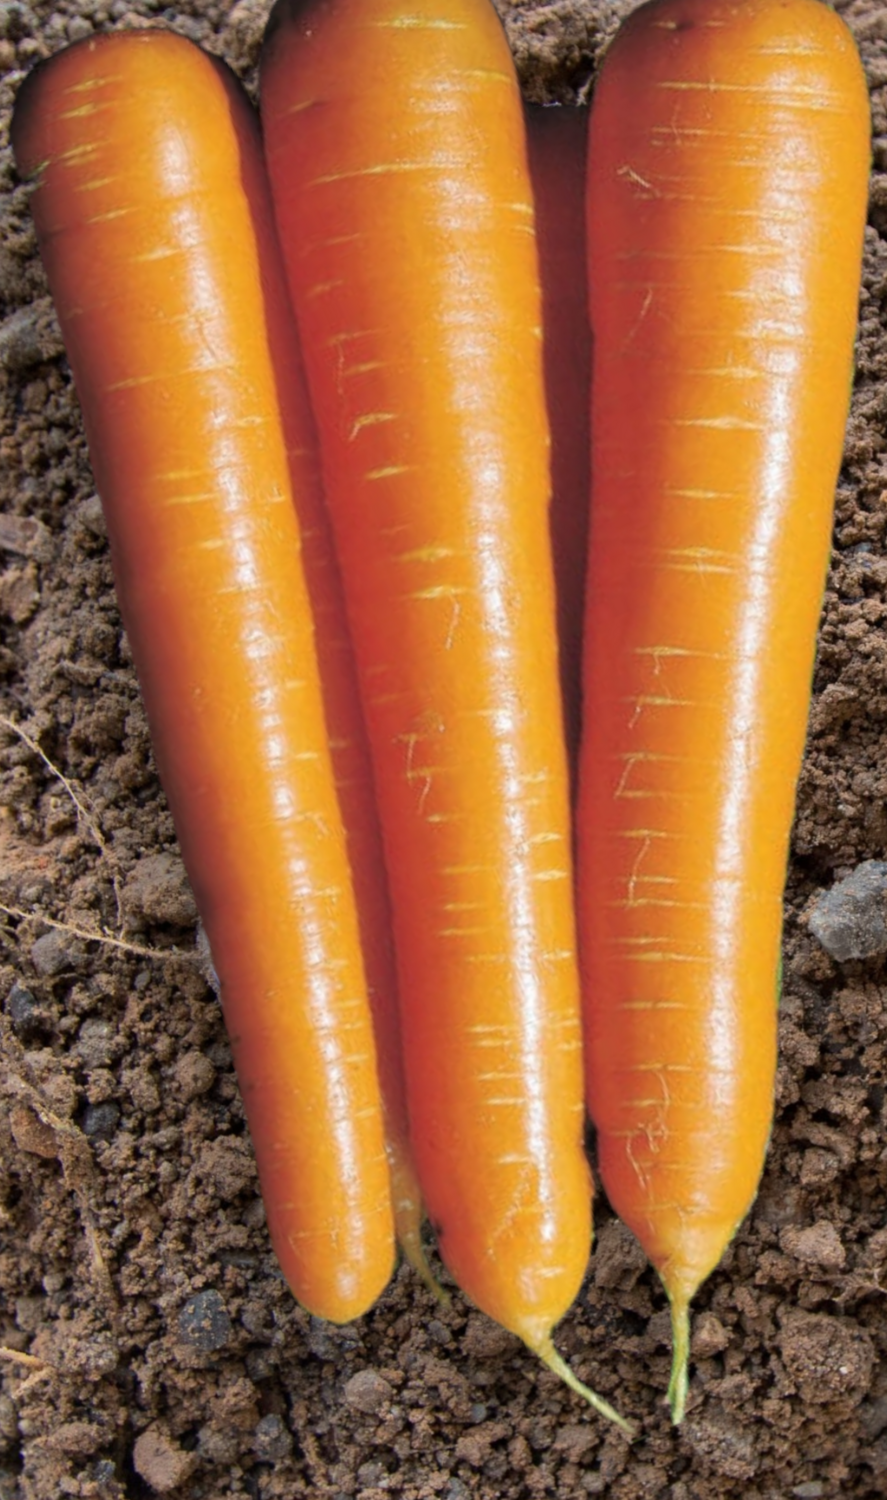 Nantindo Carrot Seeds